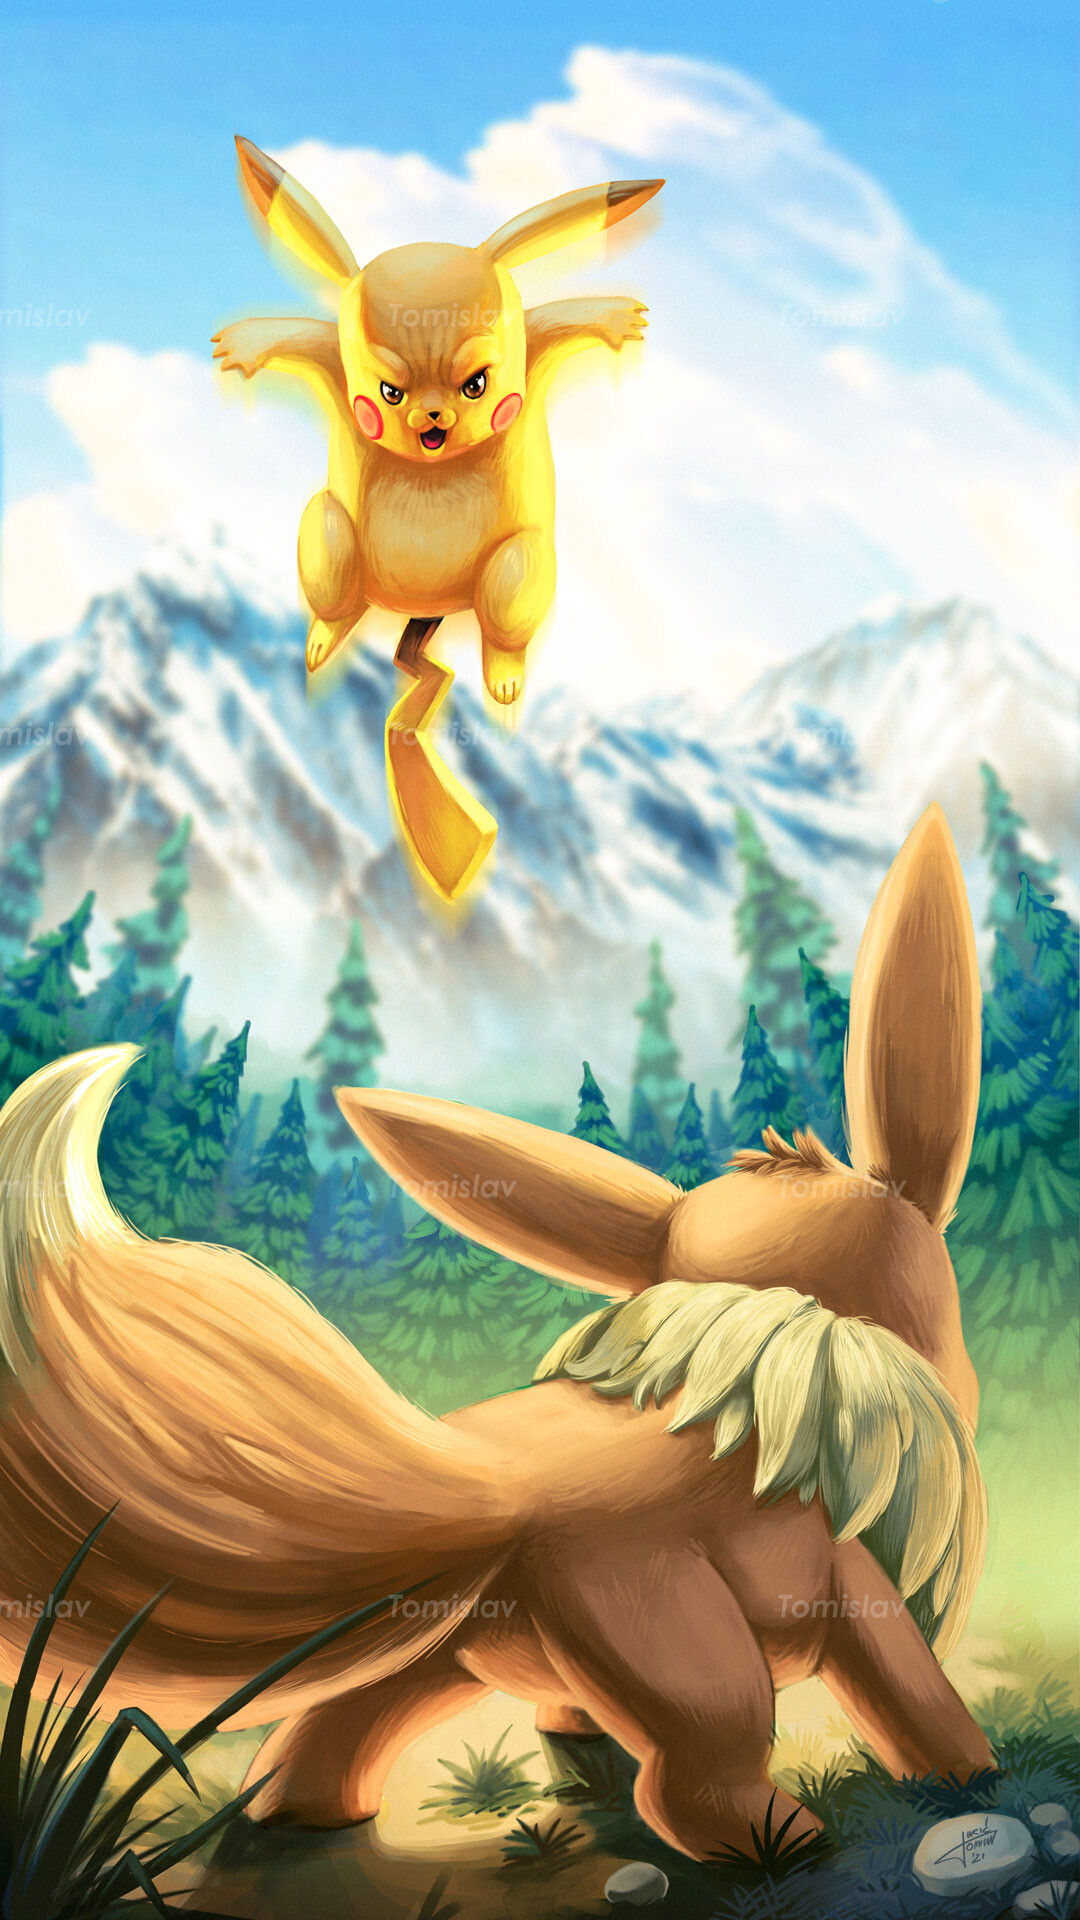 Tomislav Jurić - Pikachu vs Eevee [Pokémon Artwork]